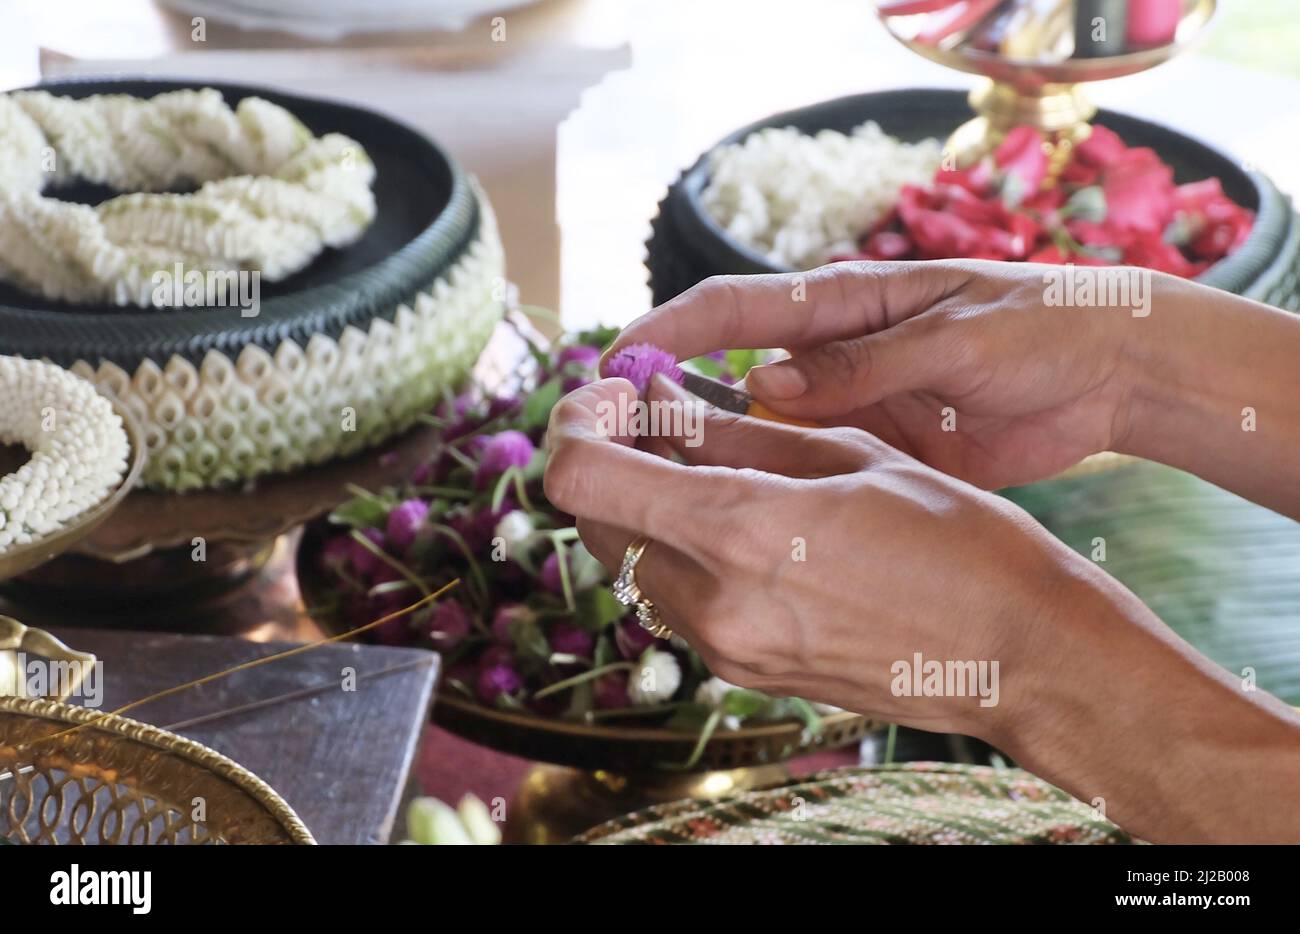 Donna a mano che fa belle ghirlande o ghirlande con Amaranth Flower, la ghirlande in stile tradizionale tailandese. Foto Stock